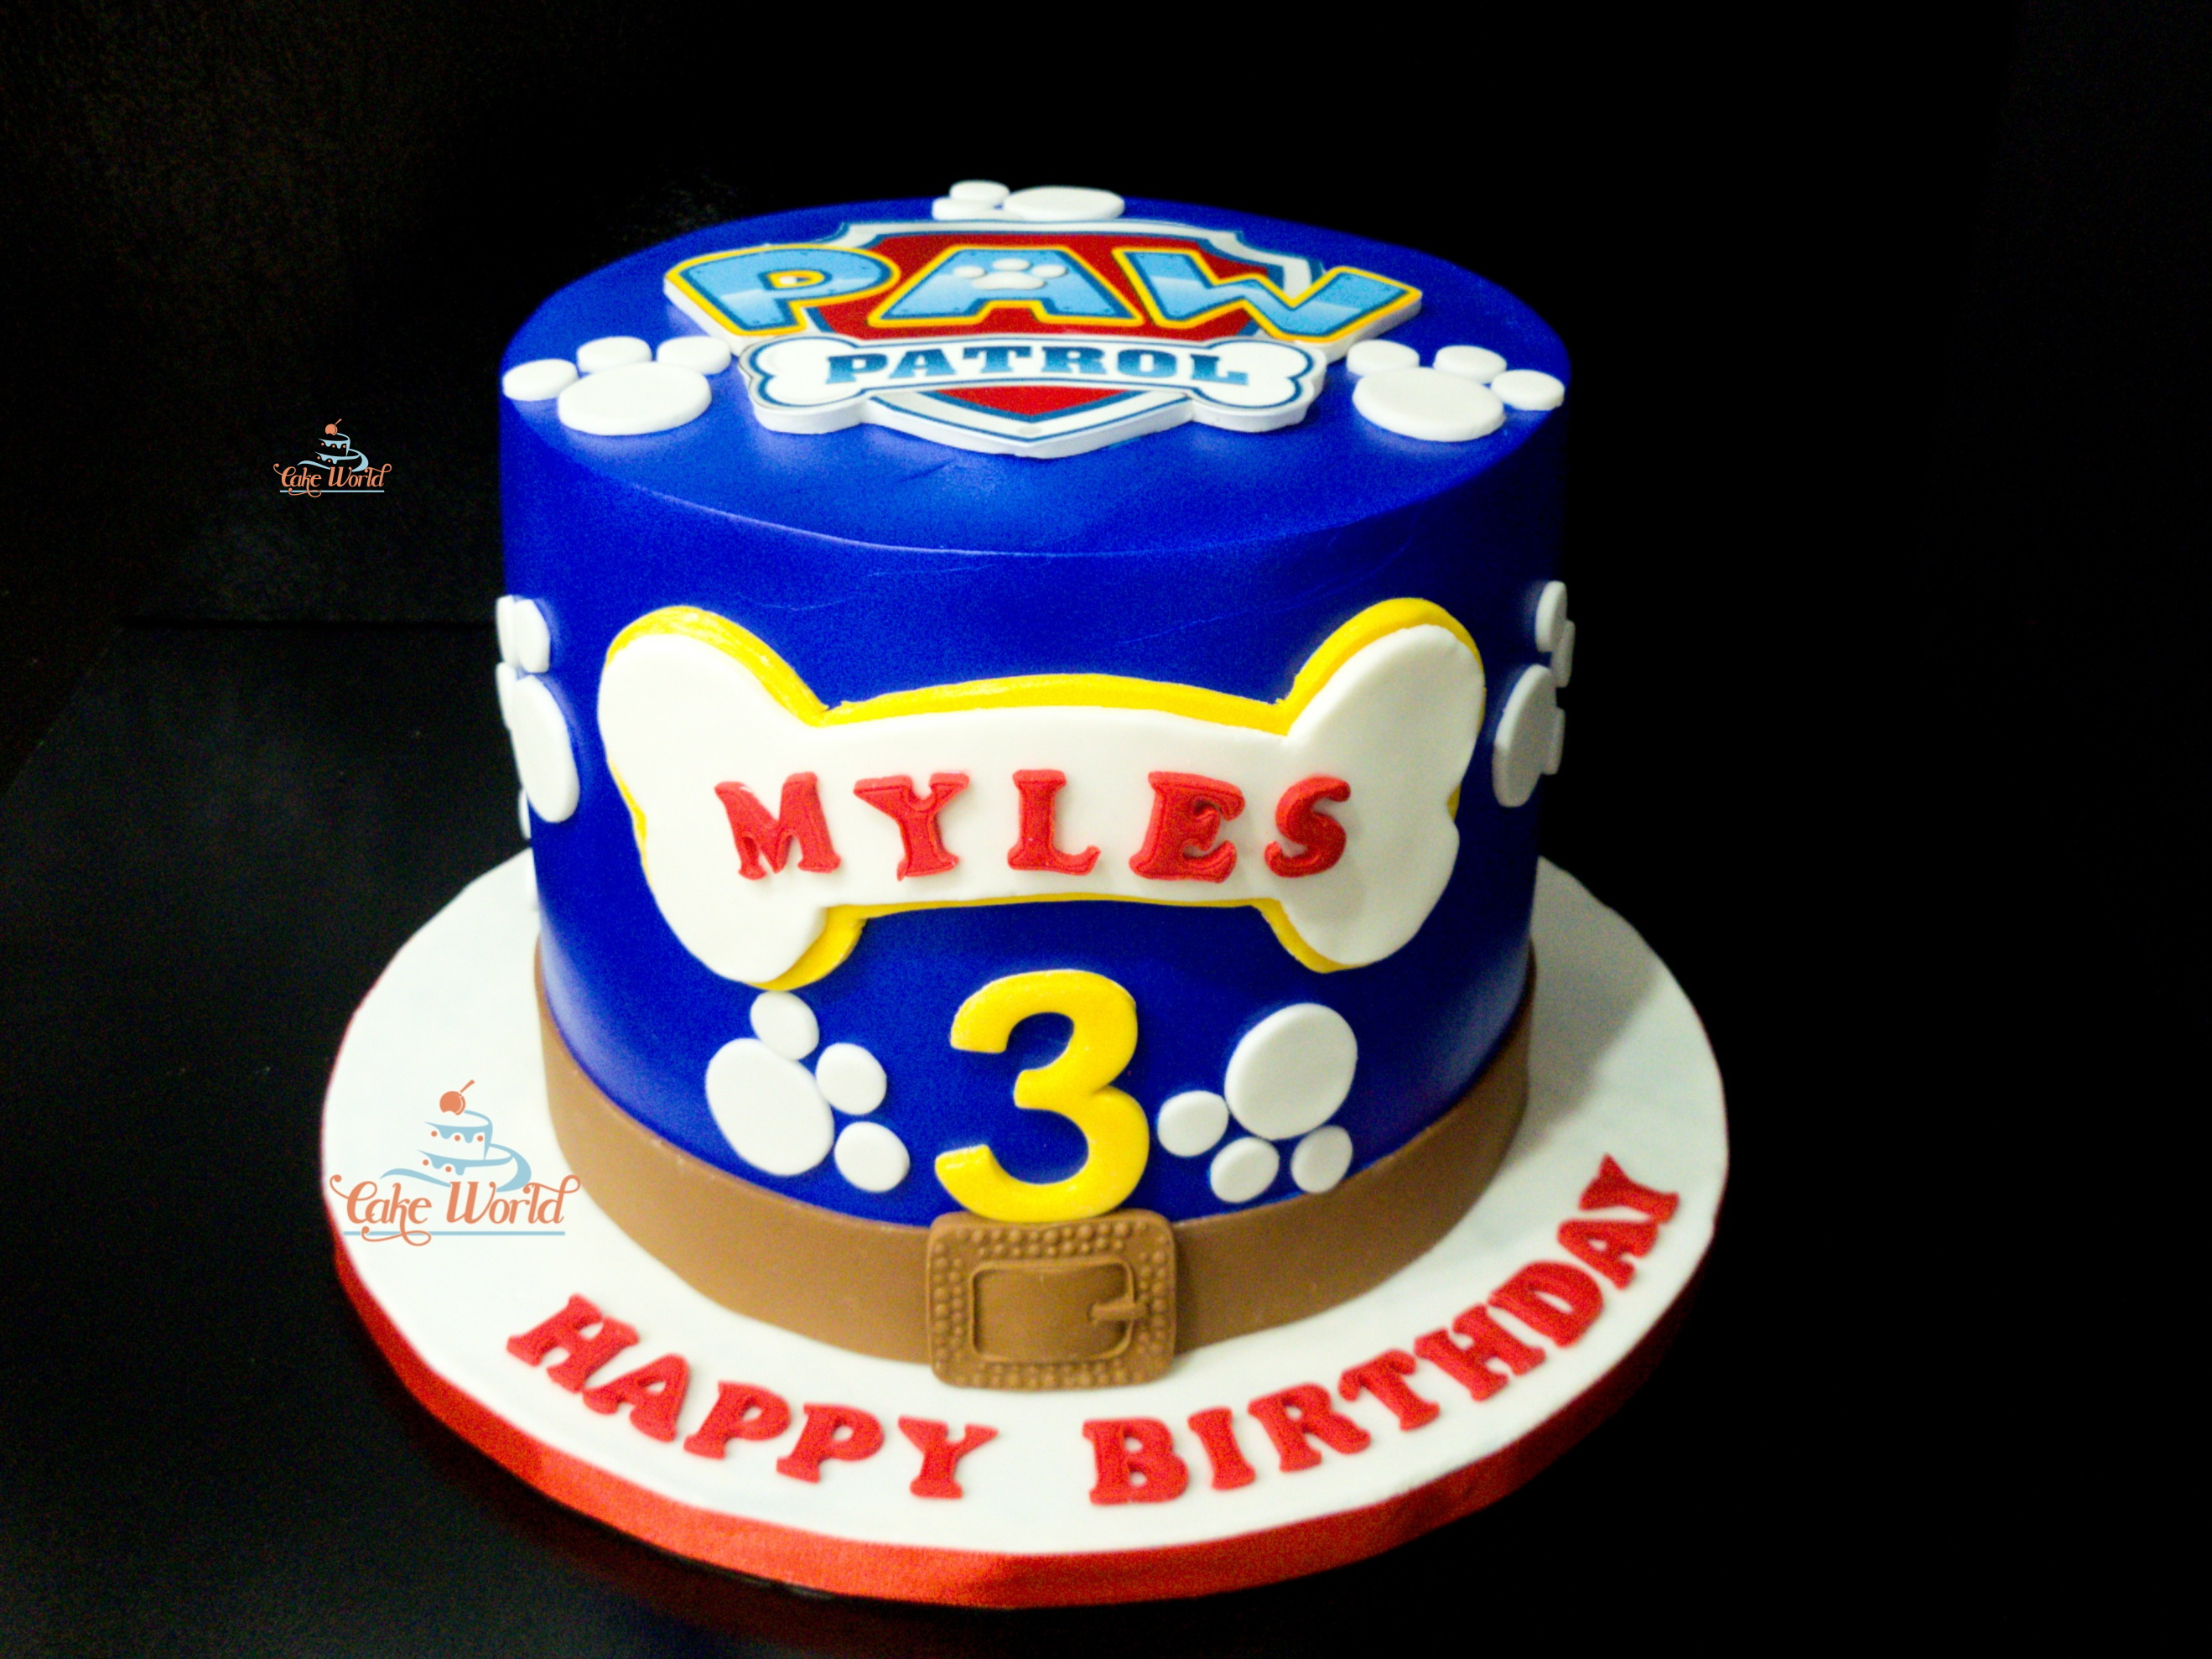 Myles Paw Petrol Cake